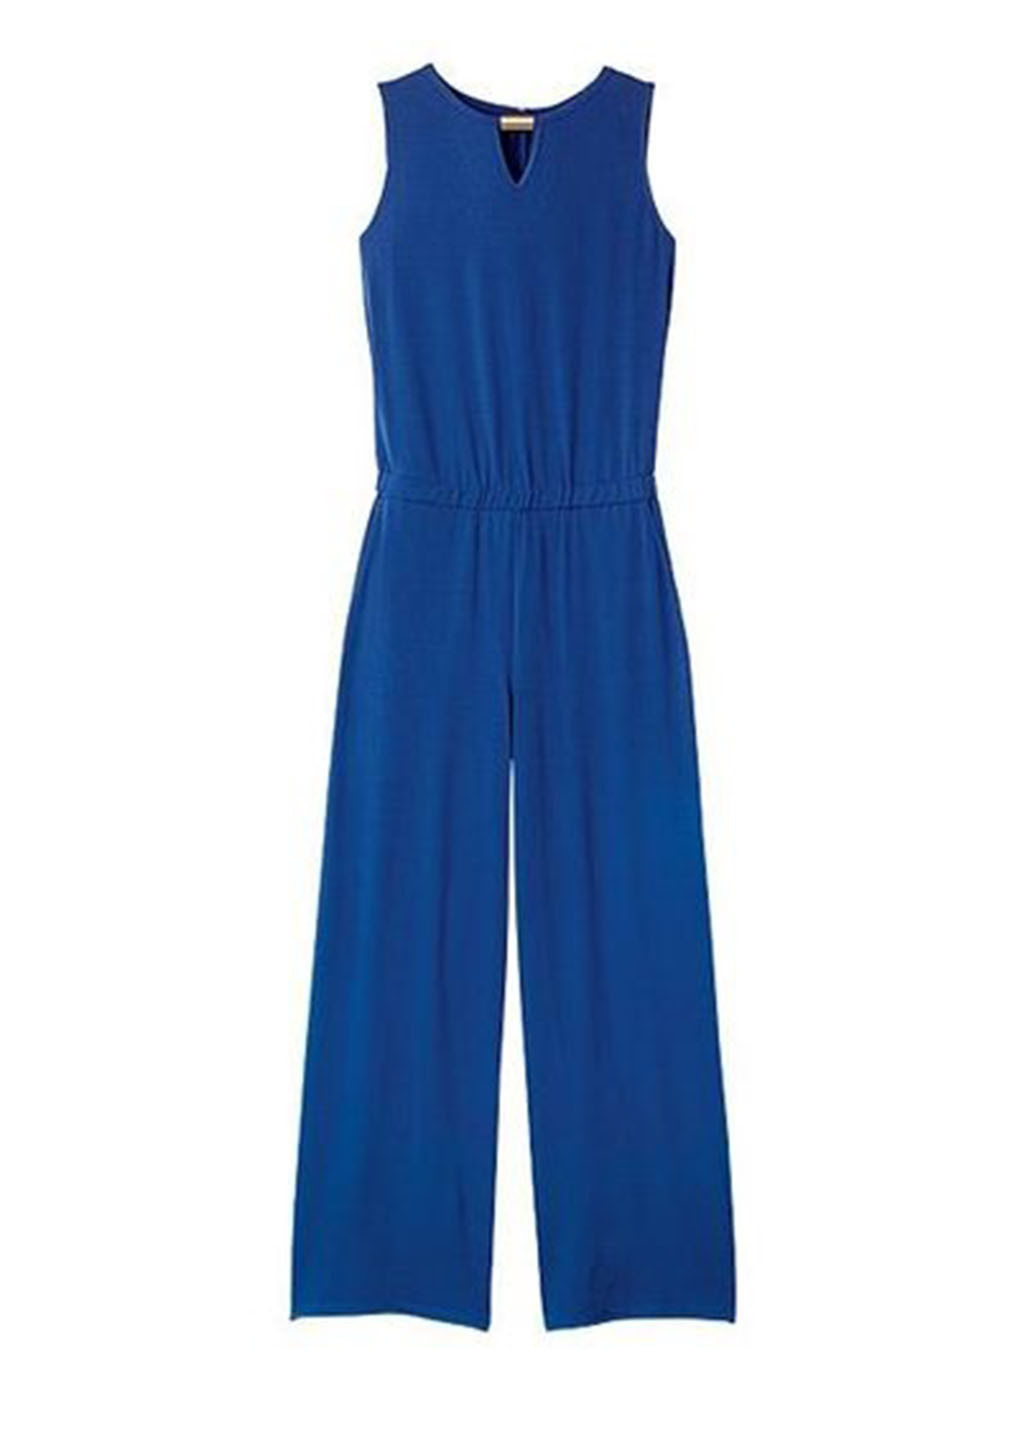 Комбинезон Avon комбинезон-брюки однотонный синий кэжуал полиэстер